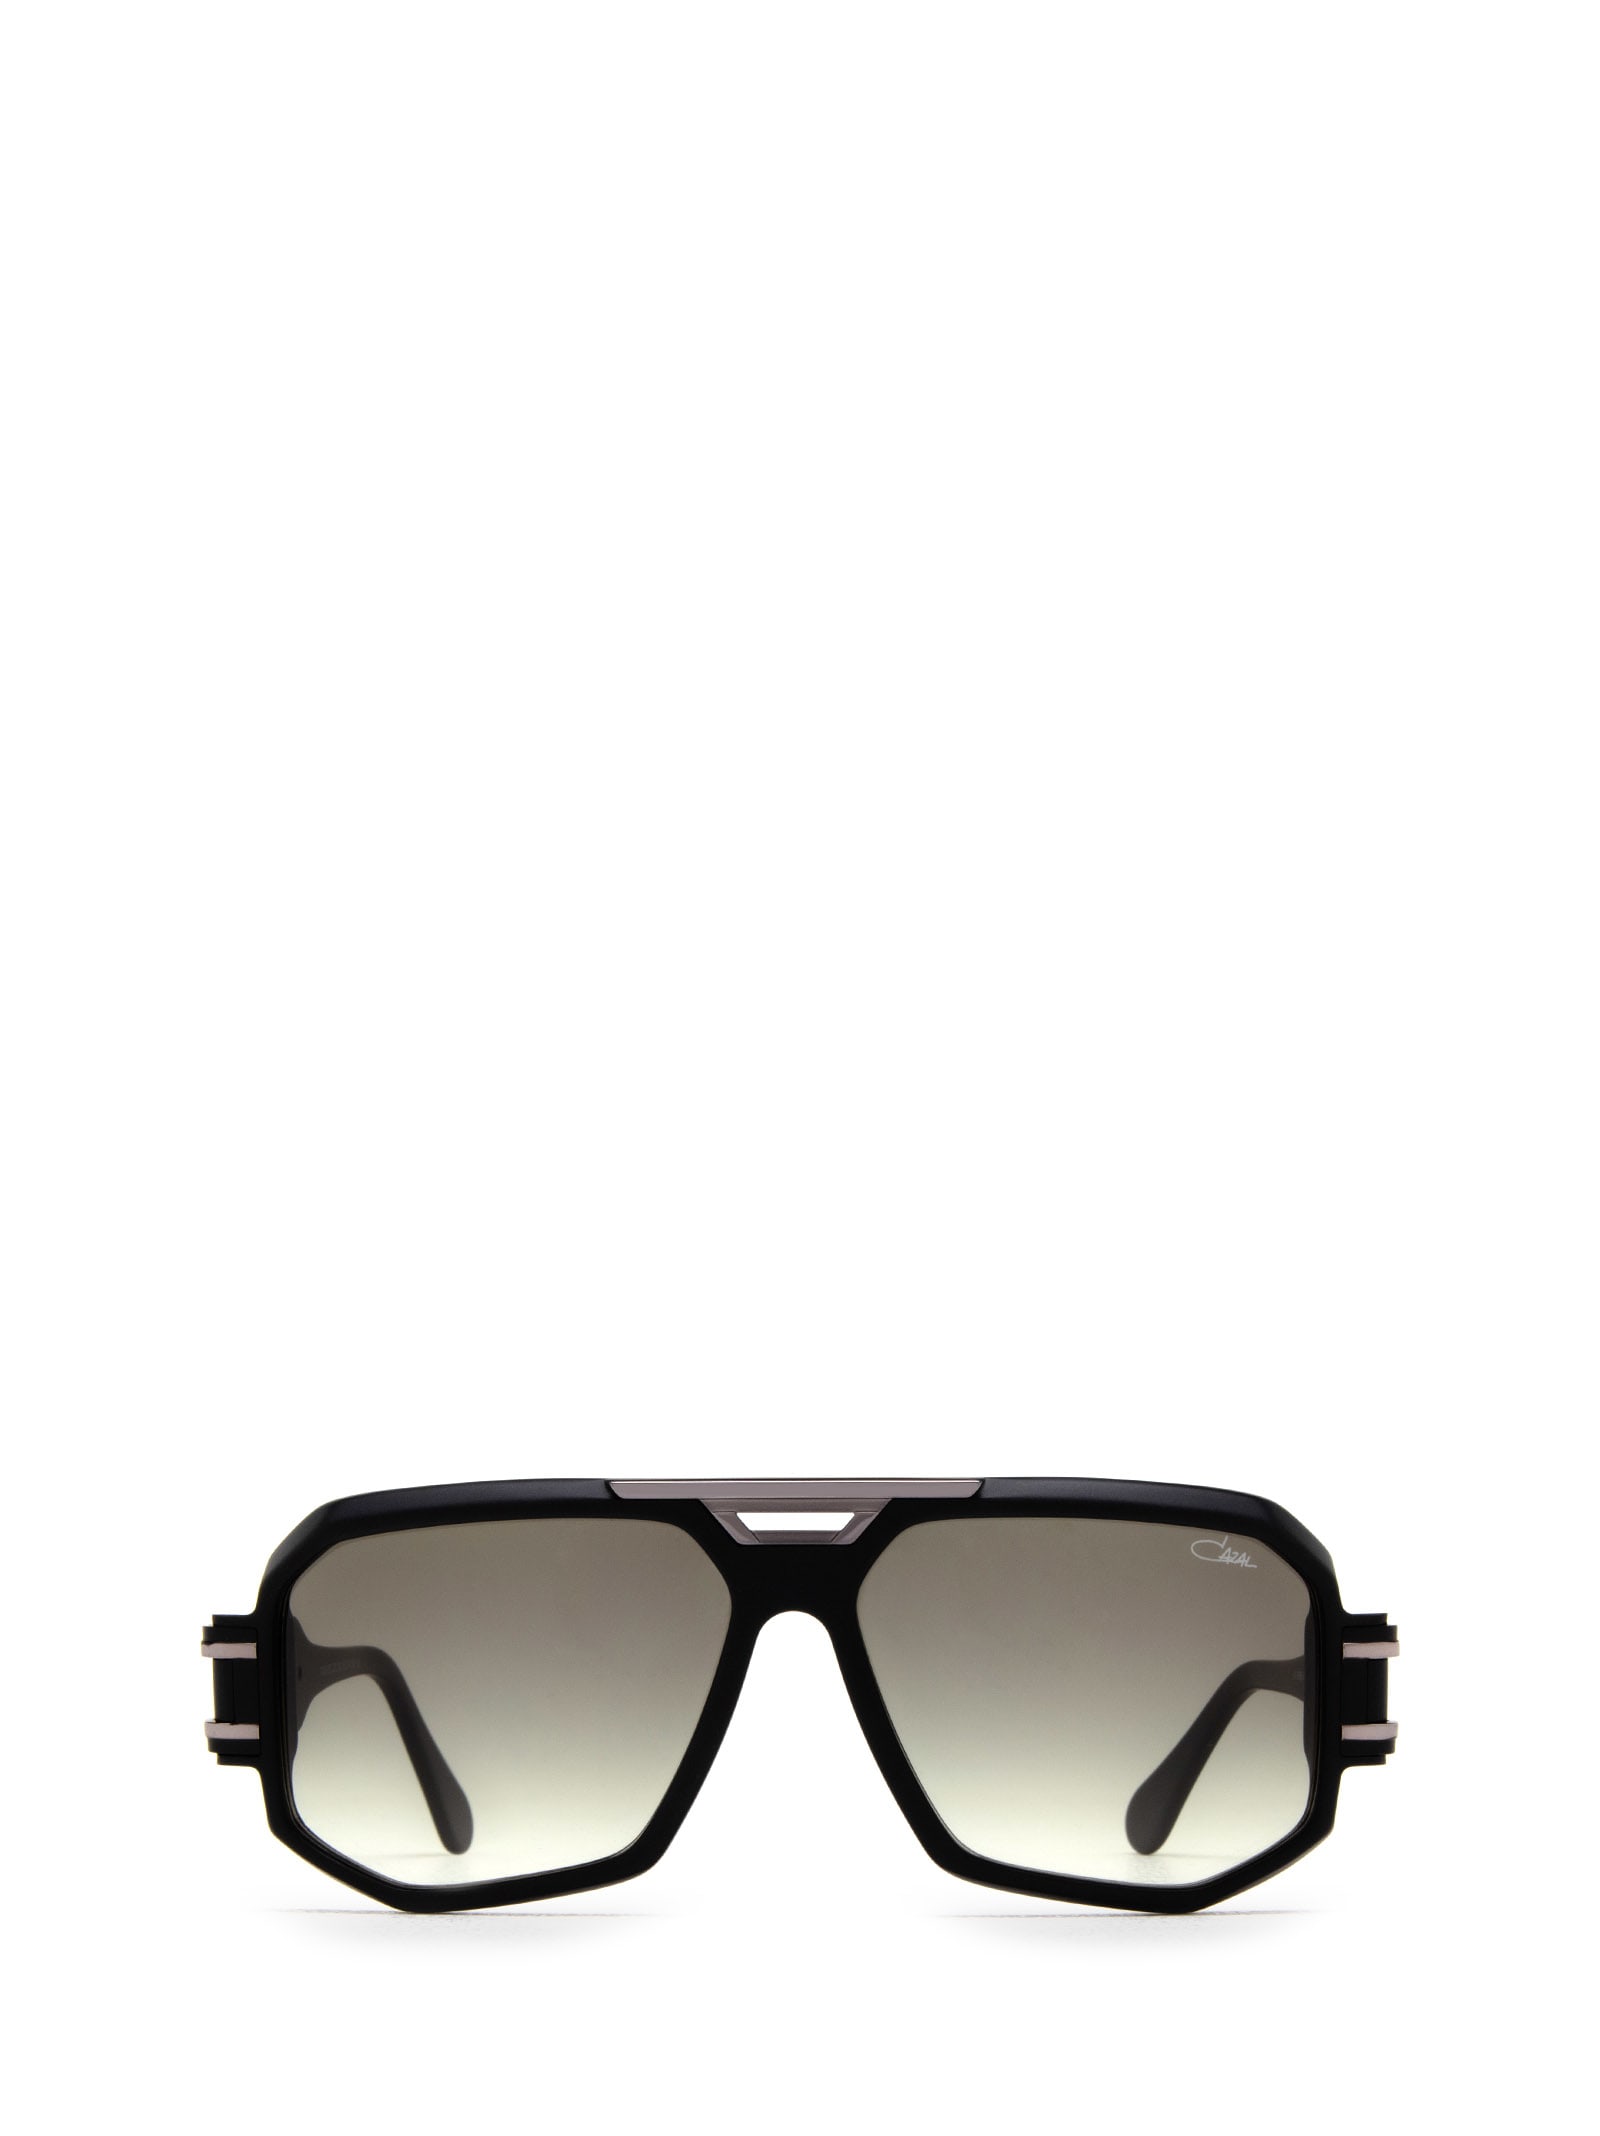 Cazal 675 Black - Gunmetal Sunglasses